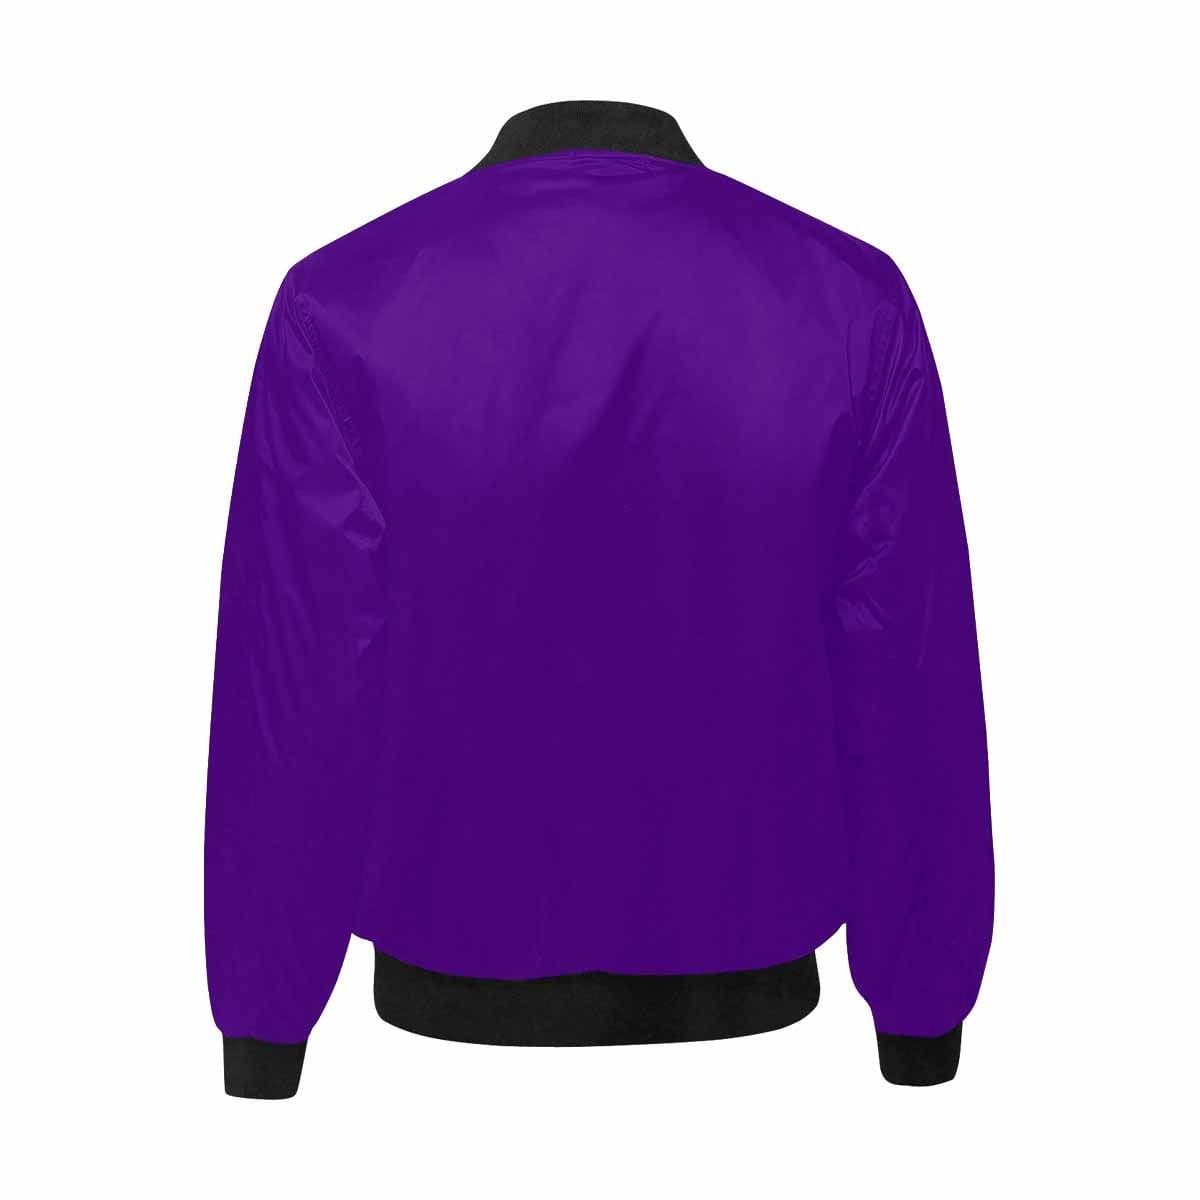 Mens Jacket Indigo Purple And Black Bomber Jacket - Mens | Jackets | Bombers